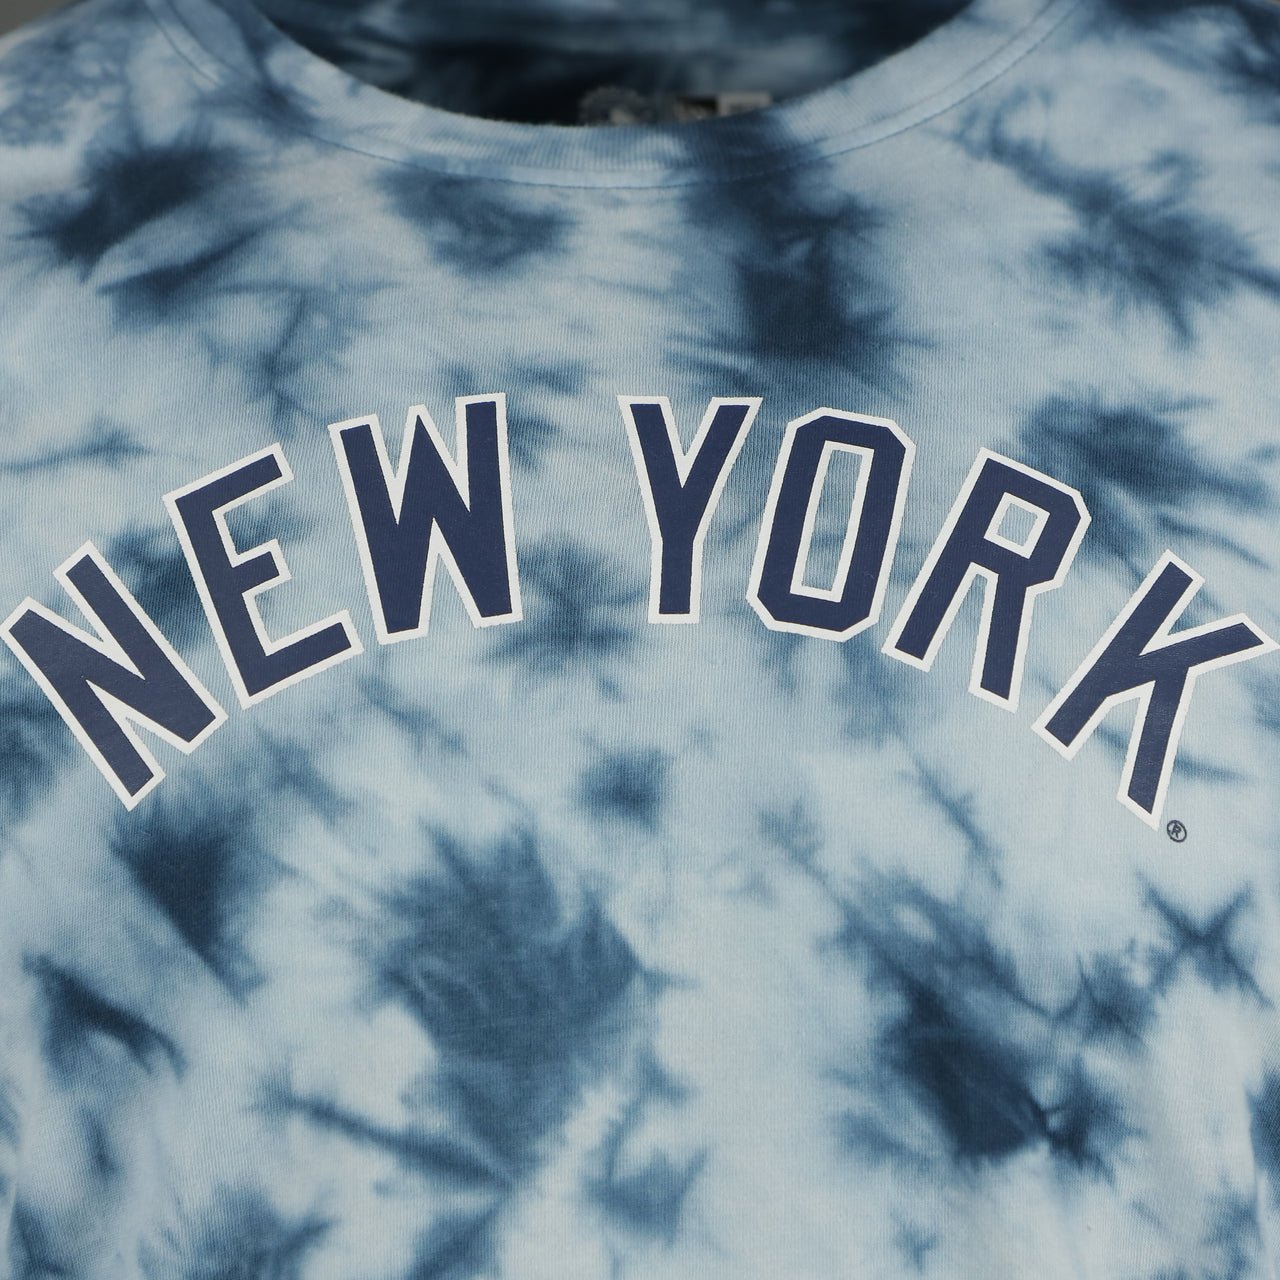 New York Yankees Current New York Wordmark Tie-Dye MLB T-Shirt | Navy Blue Tie-Dye T-shirt